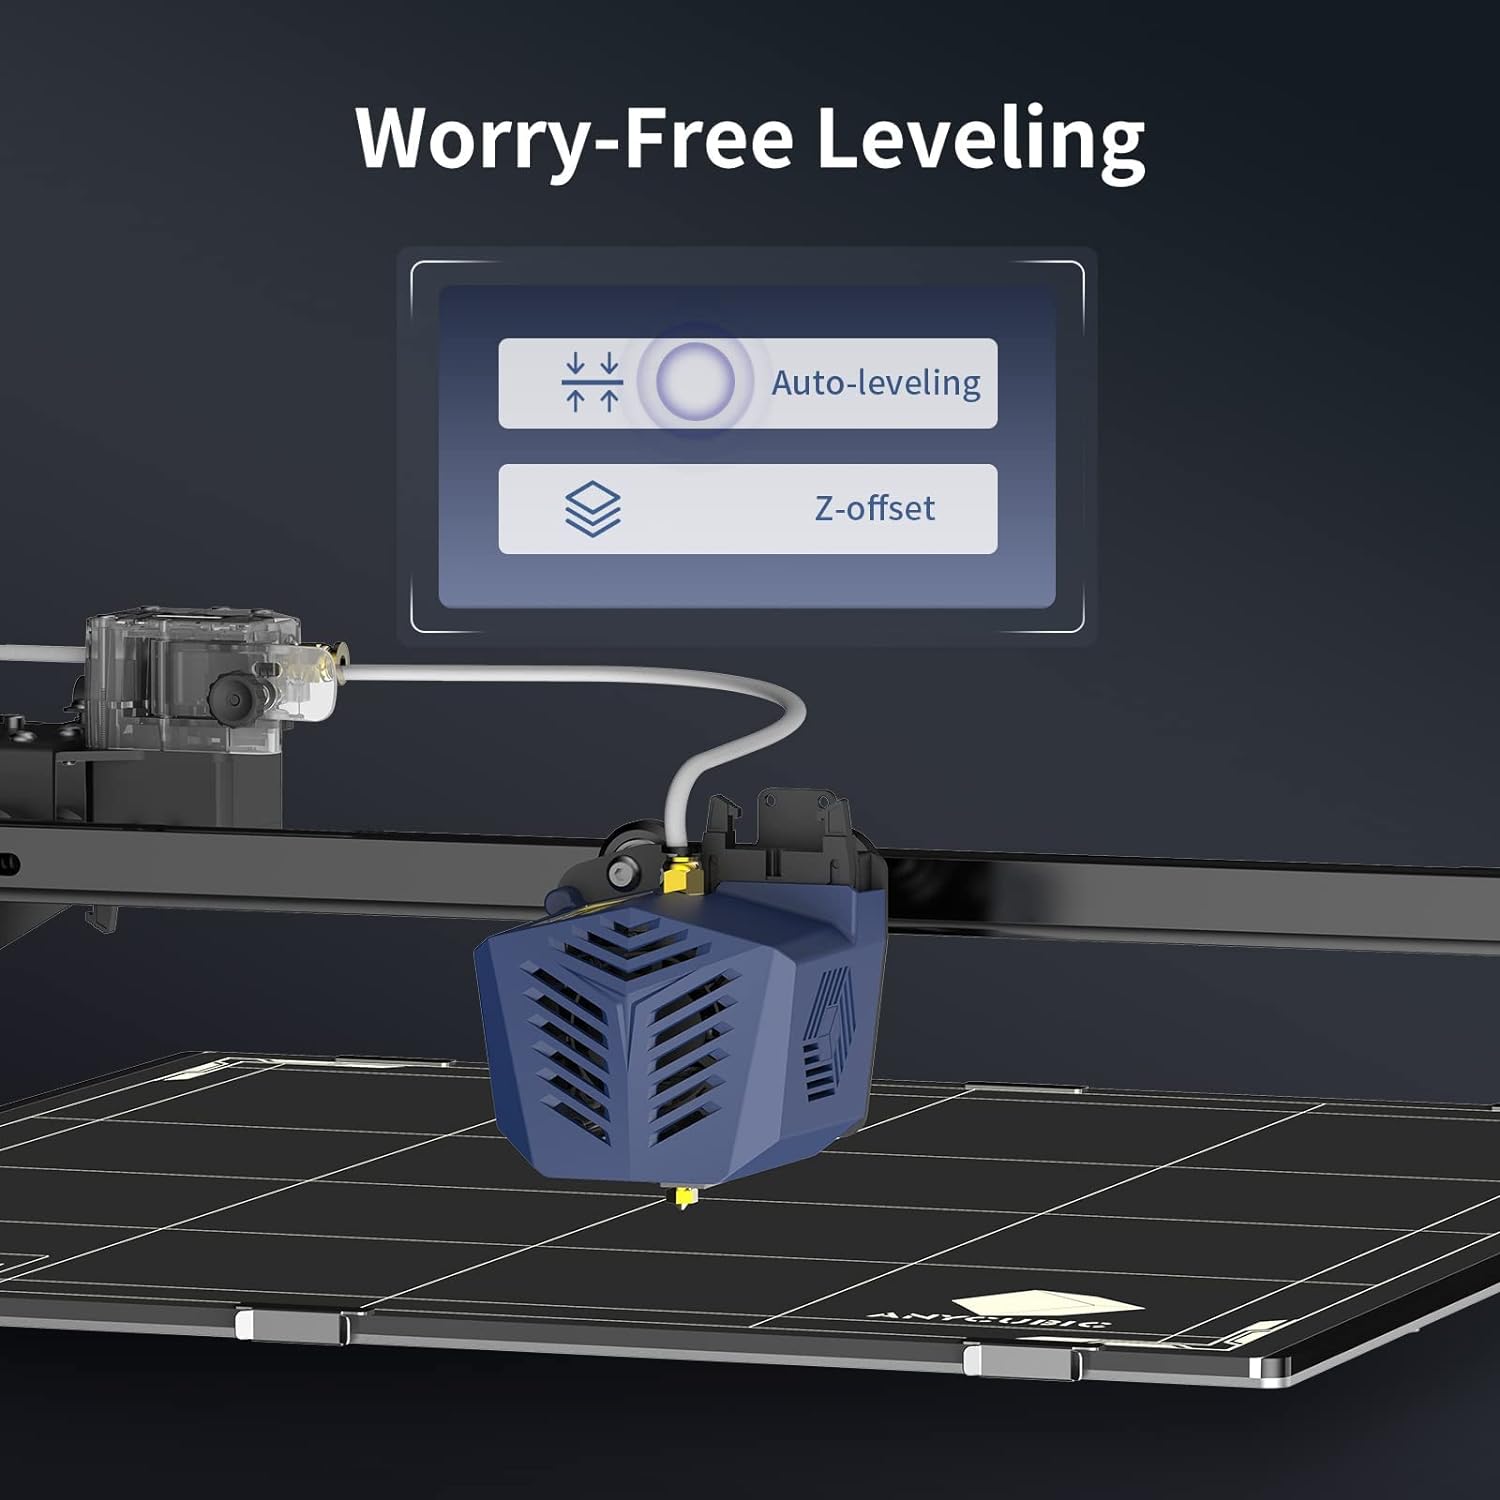 Anycubic Kobra 2 Max 3D Printer in Pakistan – VERTEX3D